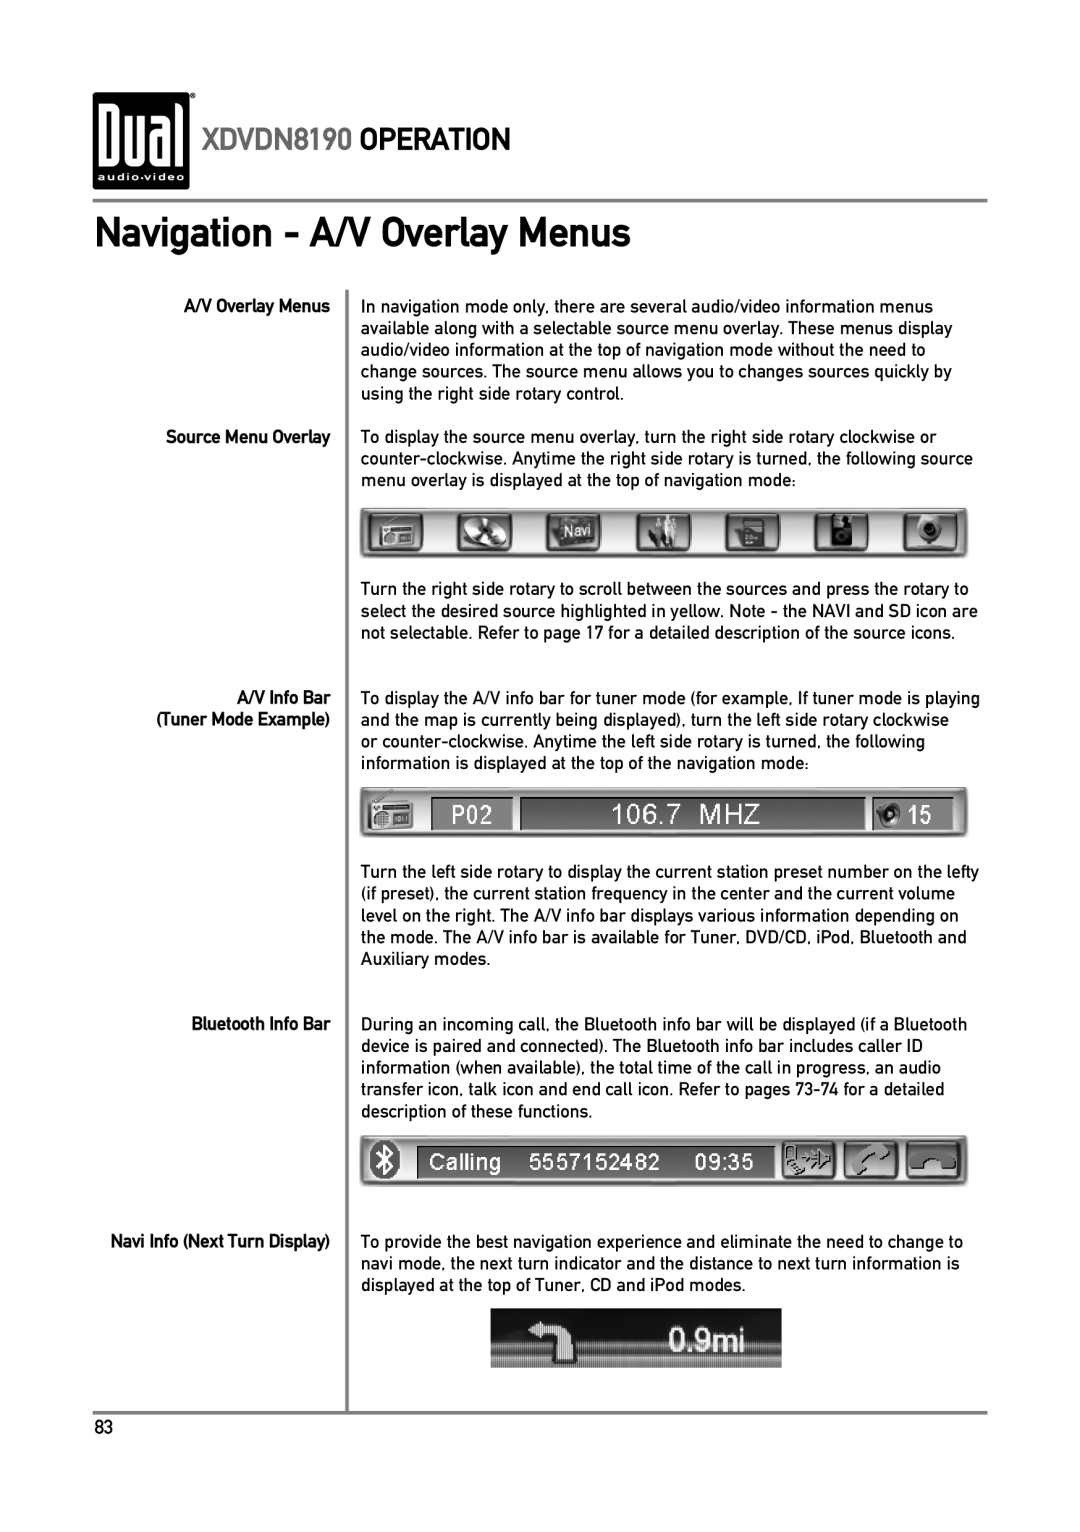 Dual Navigation - A/V Overlay Menus, XDVDN8190 OPERATION, A/V Overlay Menus Source Menu Overlay, Bluetooth Info Bar 